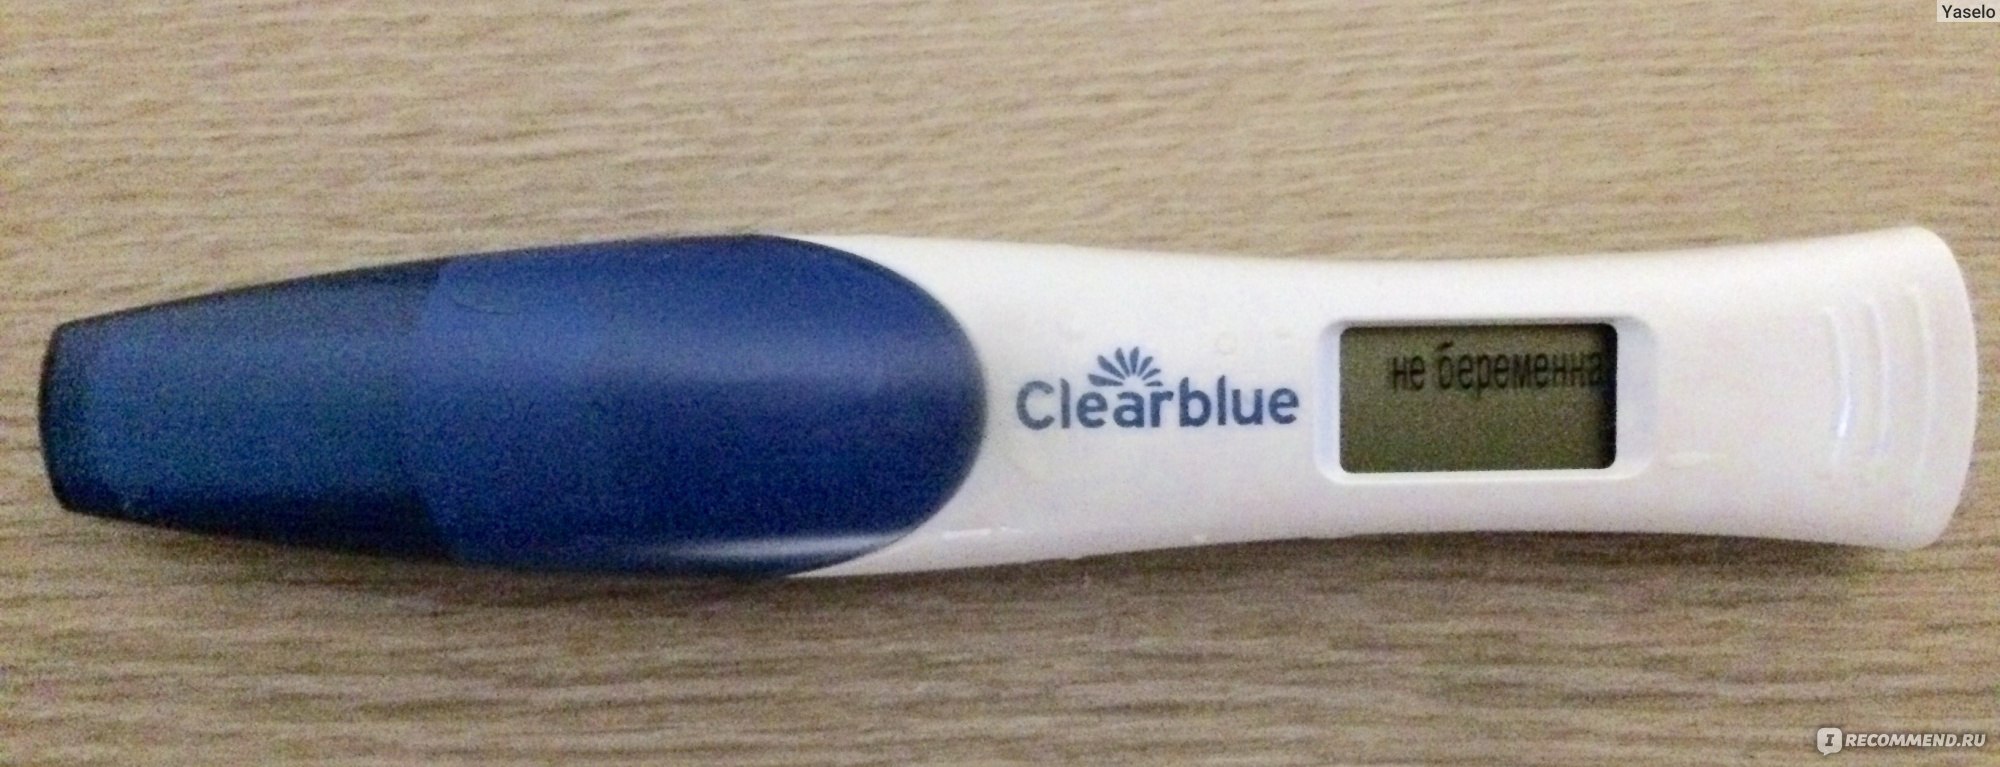 Электронный тест Clearblue отрицательный